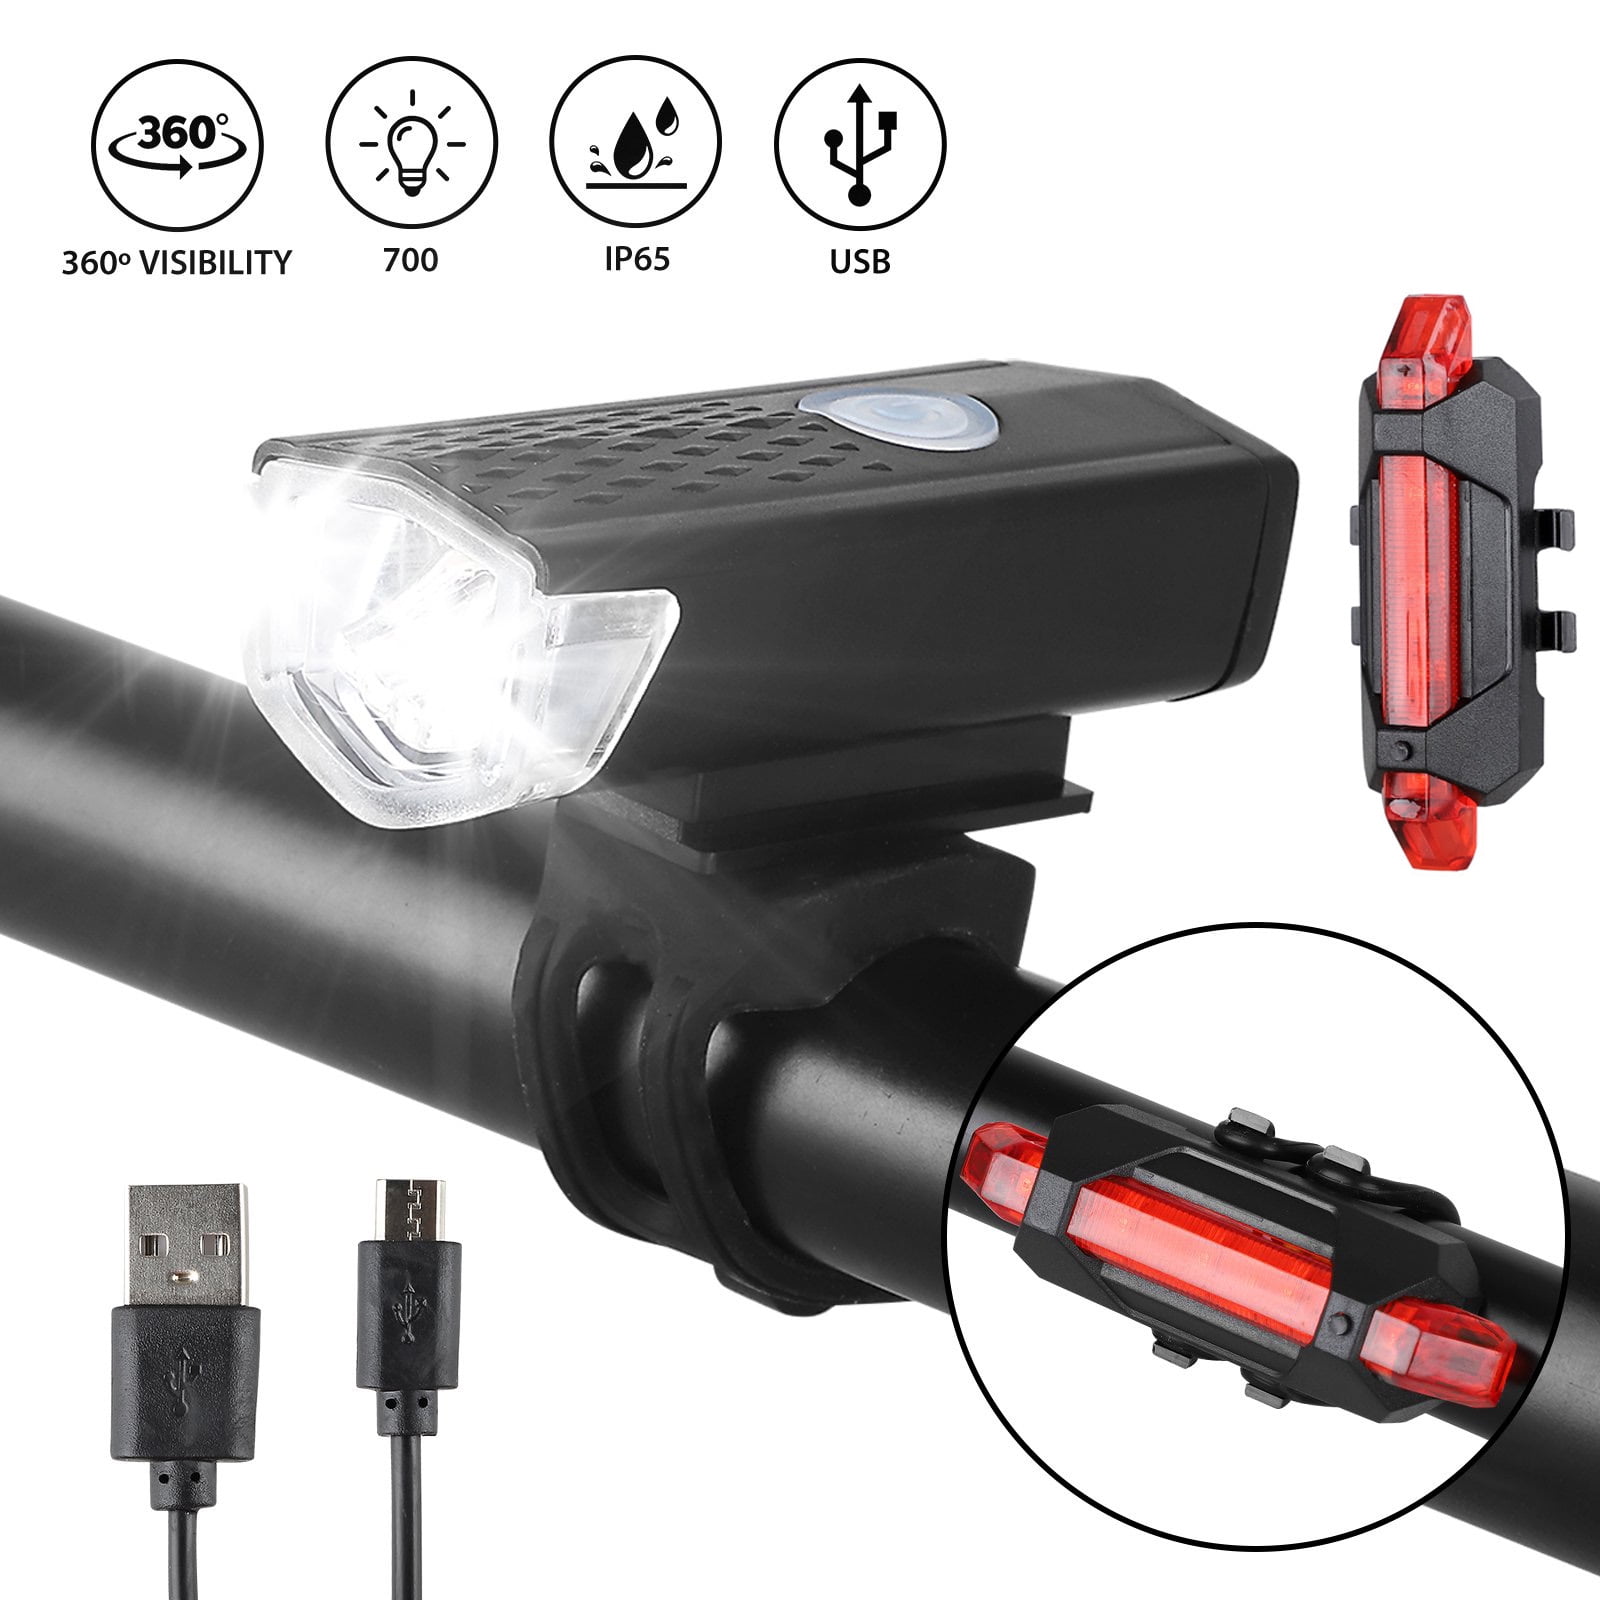 Premium USB Rechargeable 1000 Lumen LED Bike Light Headlight Taillight Set 